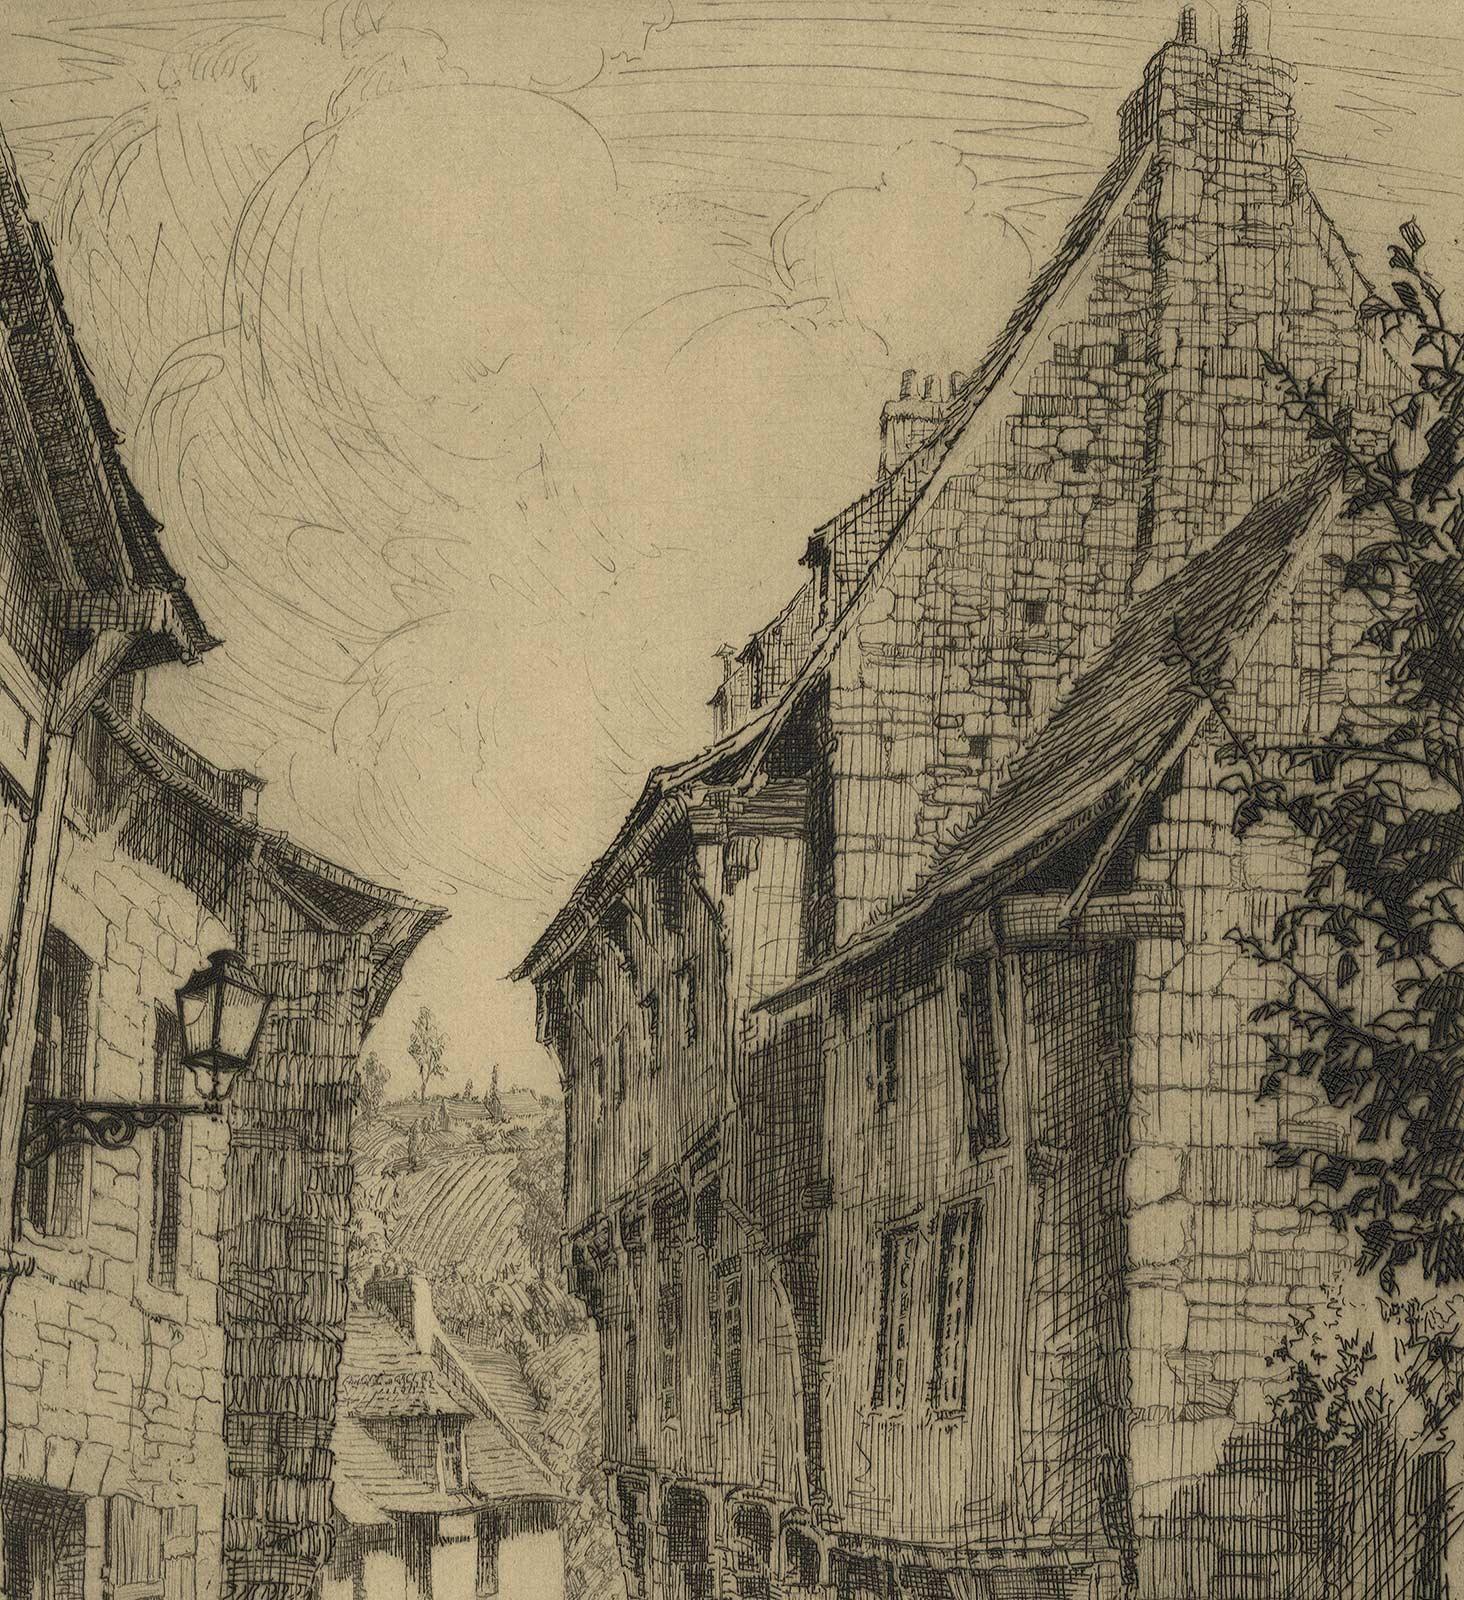 Rue droit a L'Escaole - Print by Earl Stetson Crawford